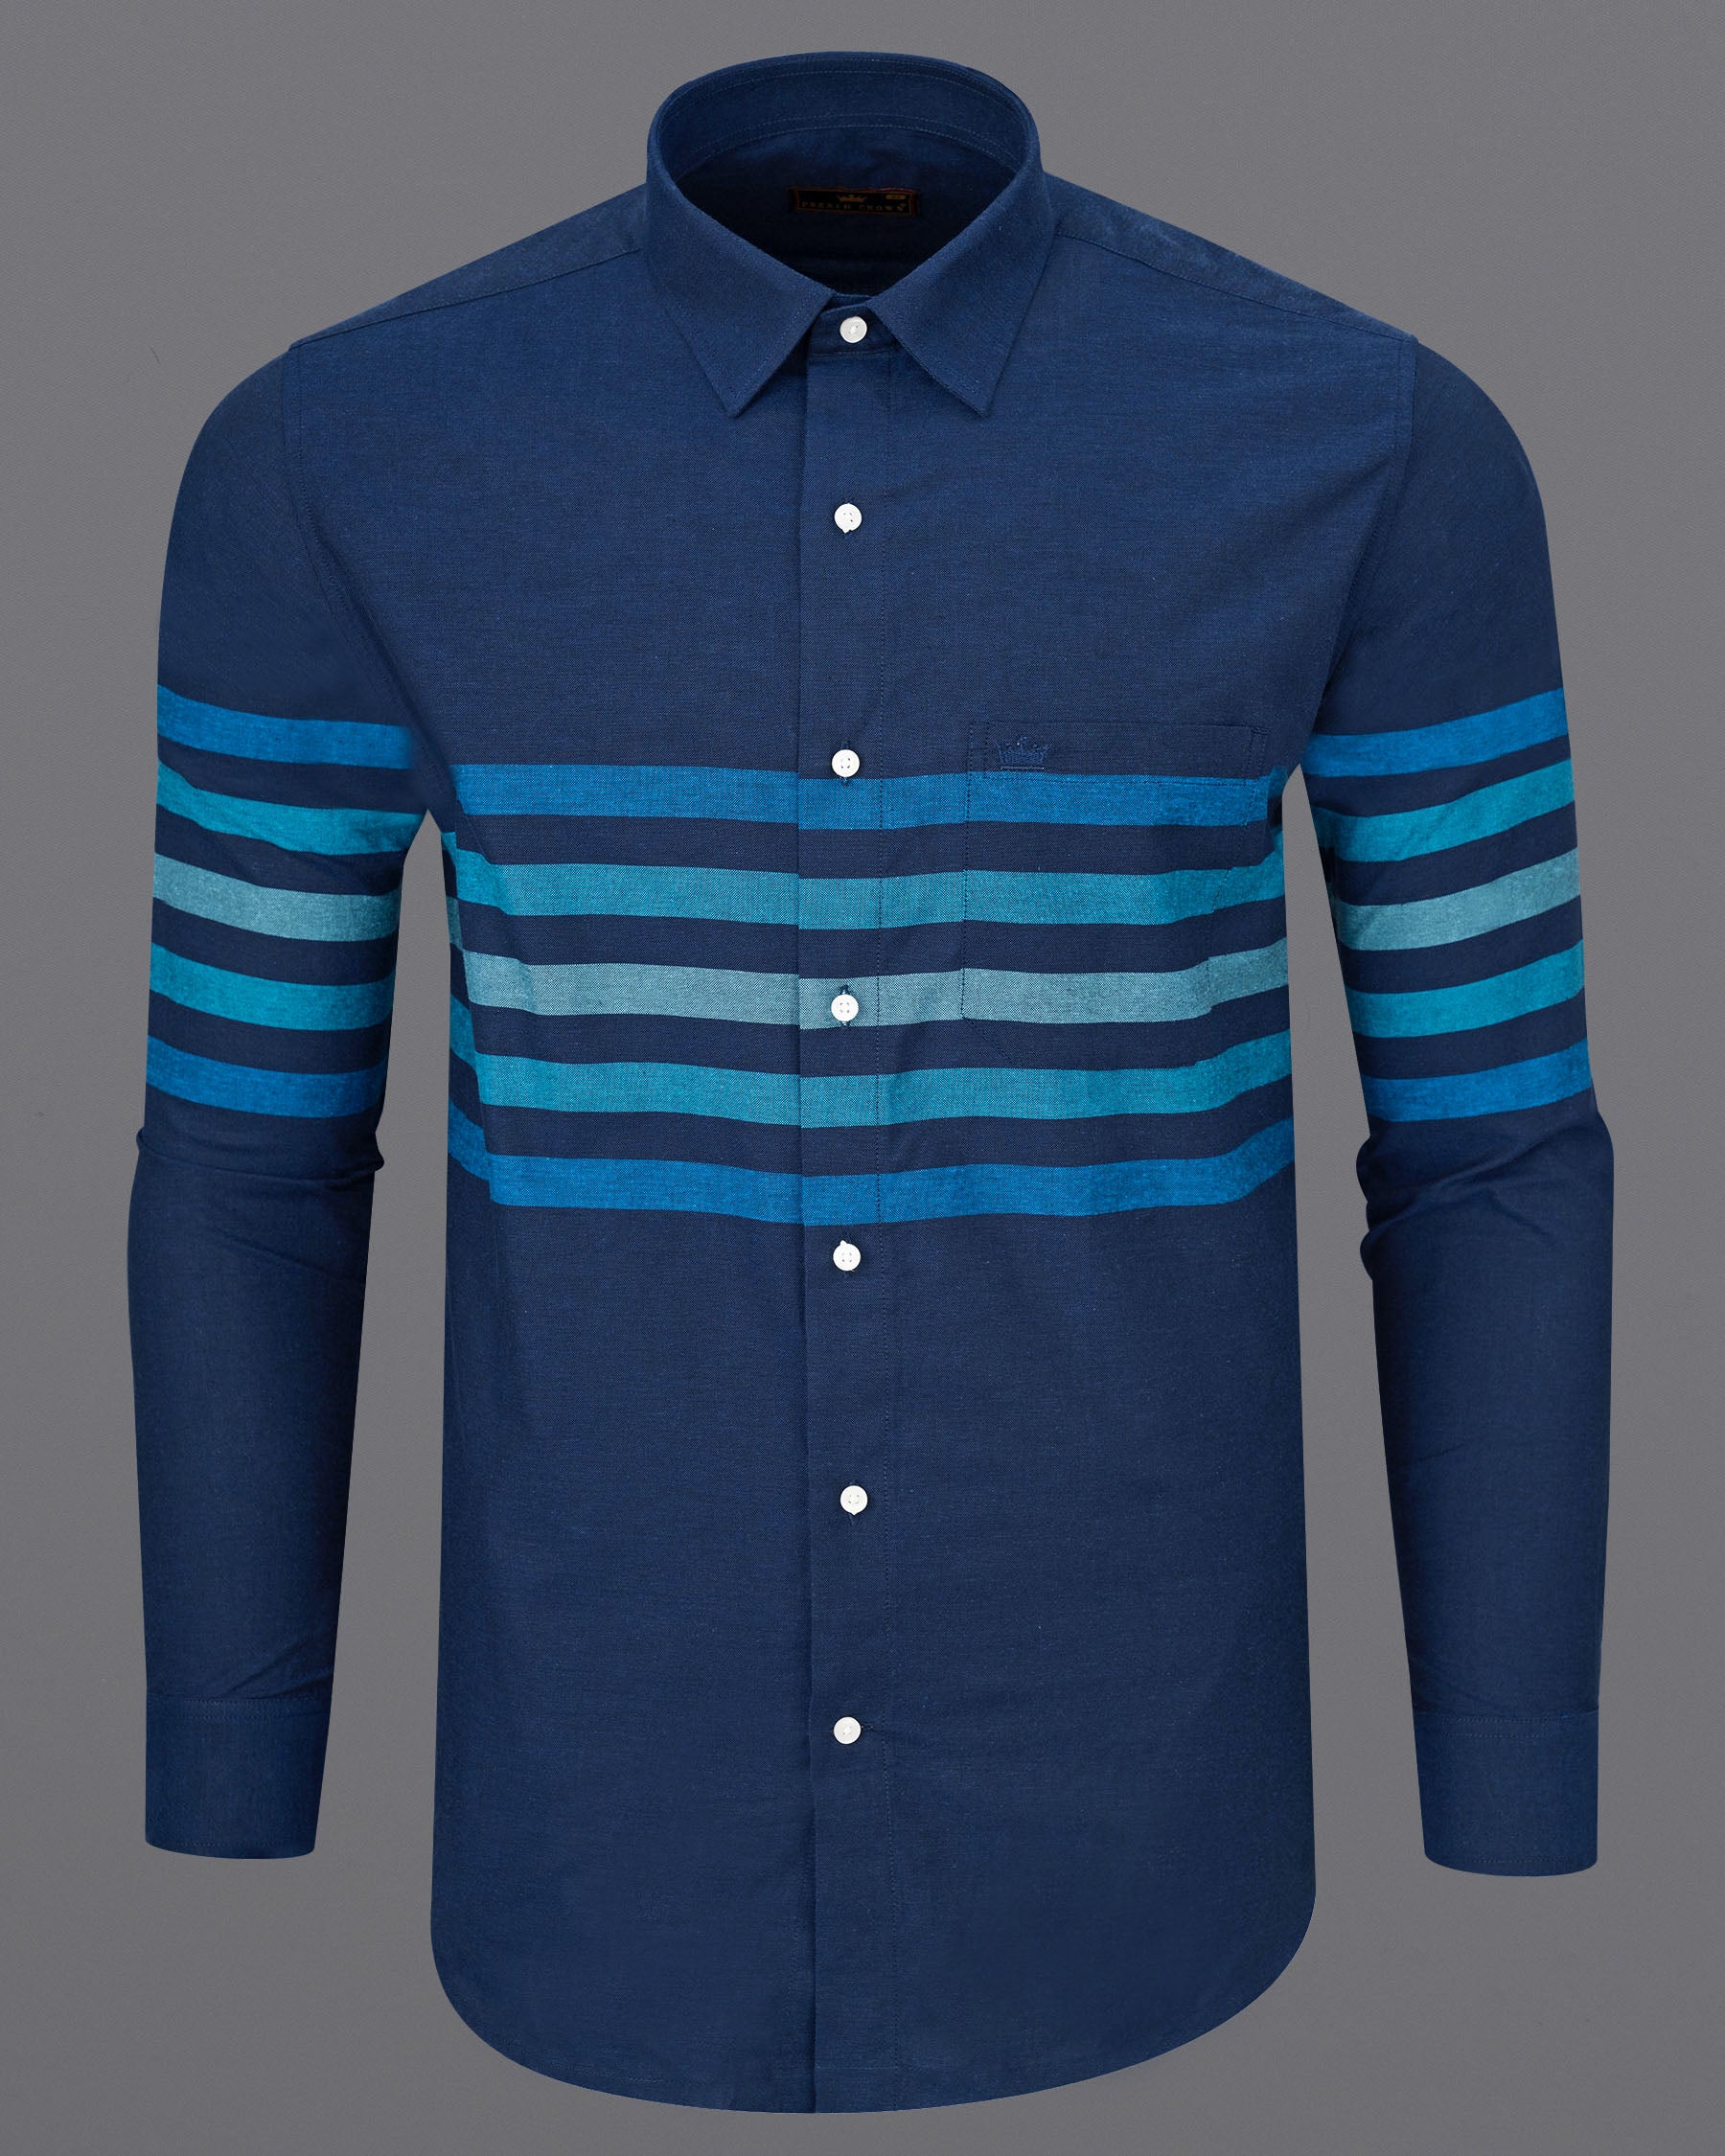 Cloud Burst and Chambray Blue Striped Royal Oxford Shirt